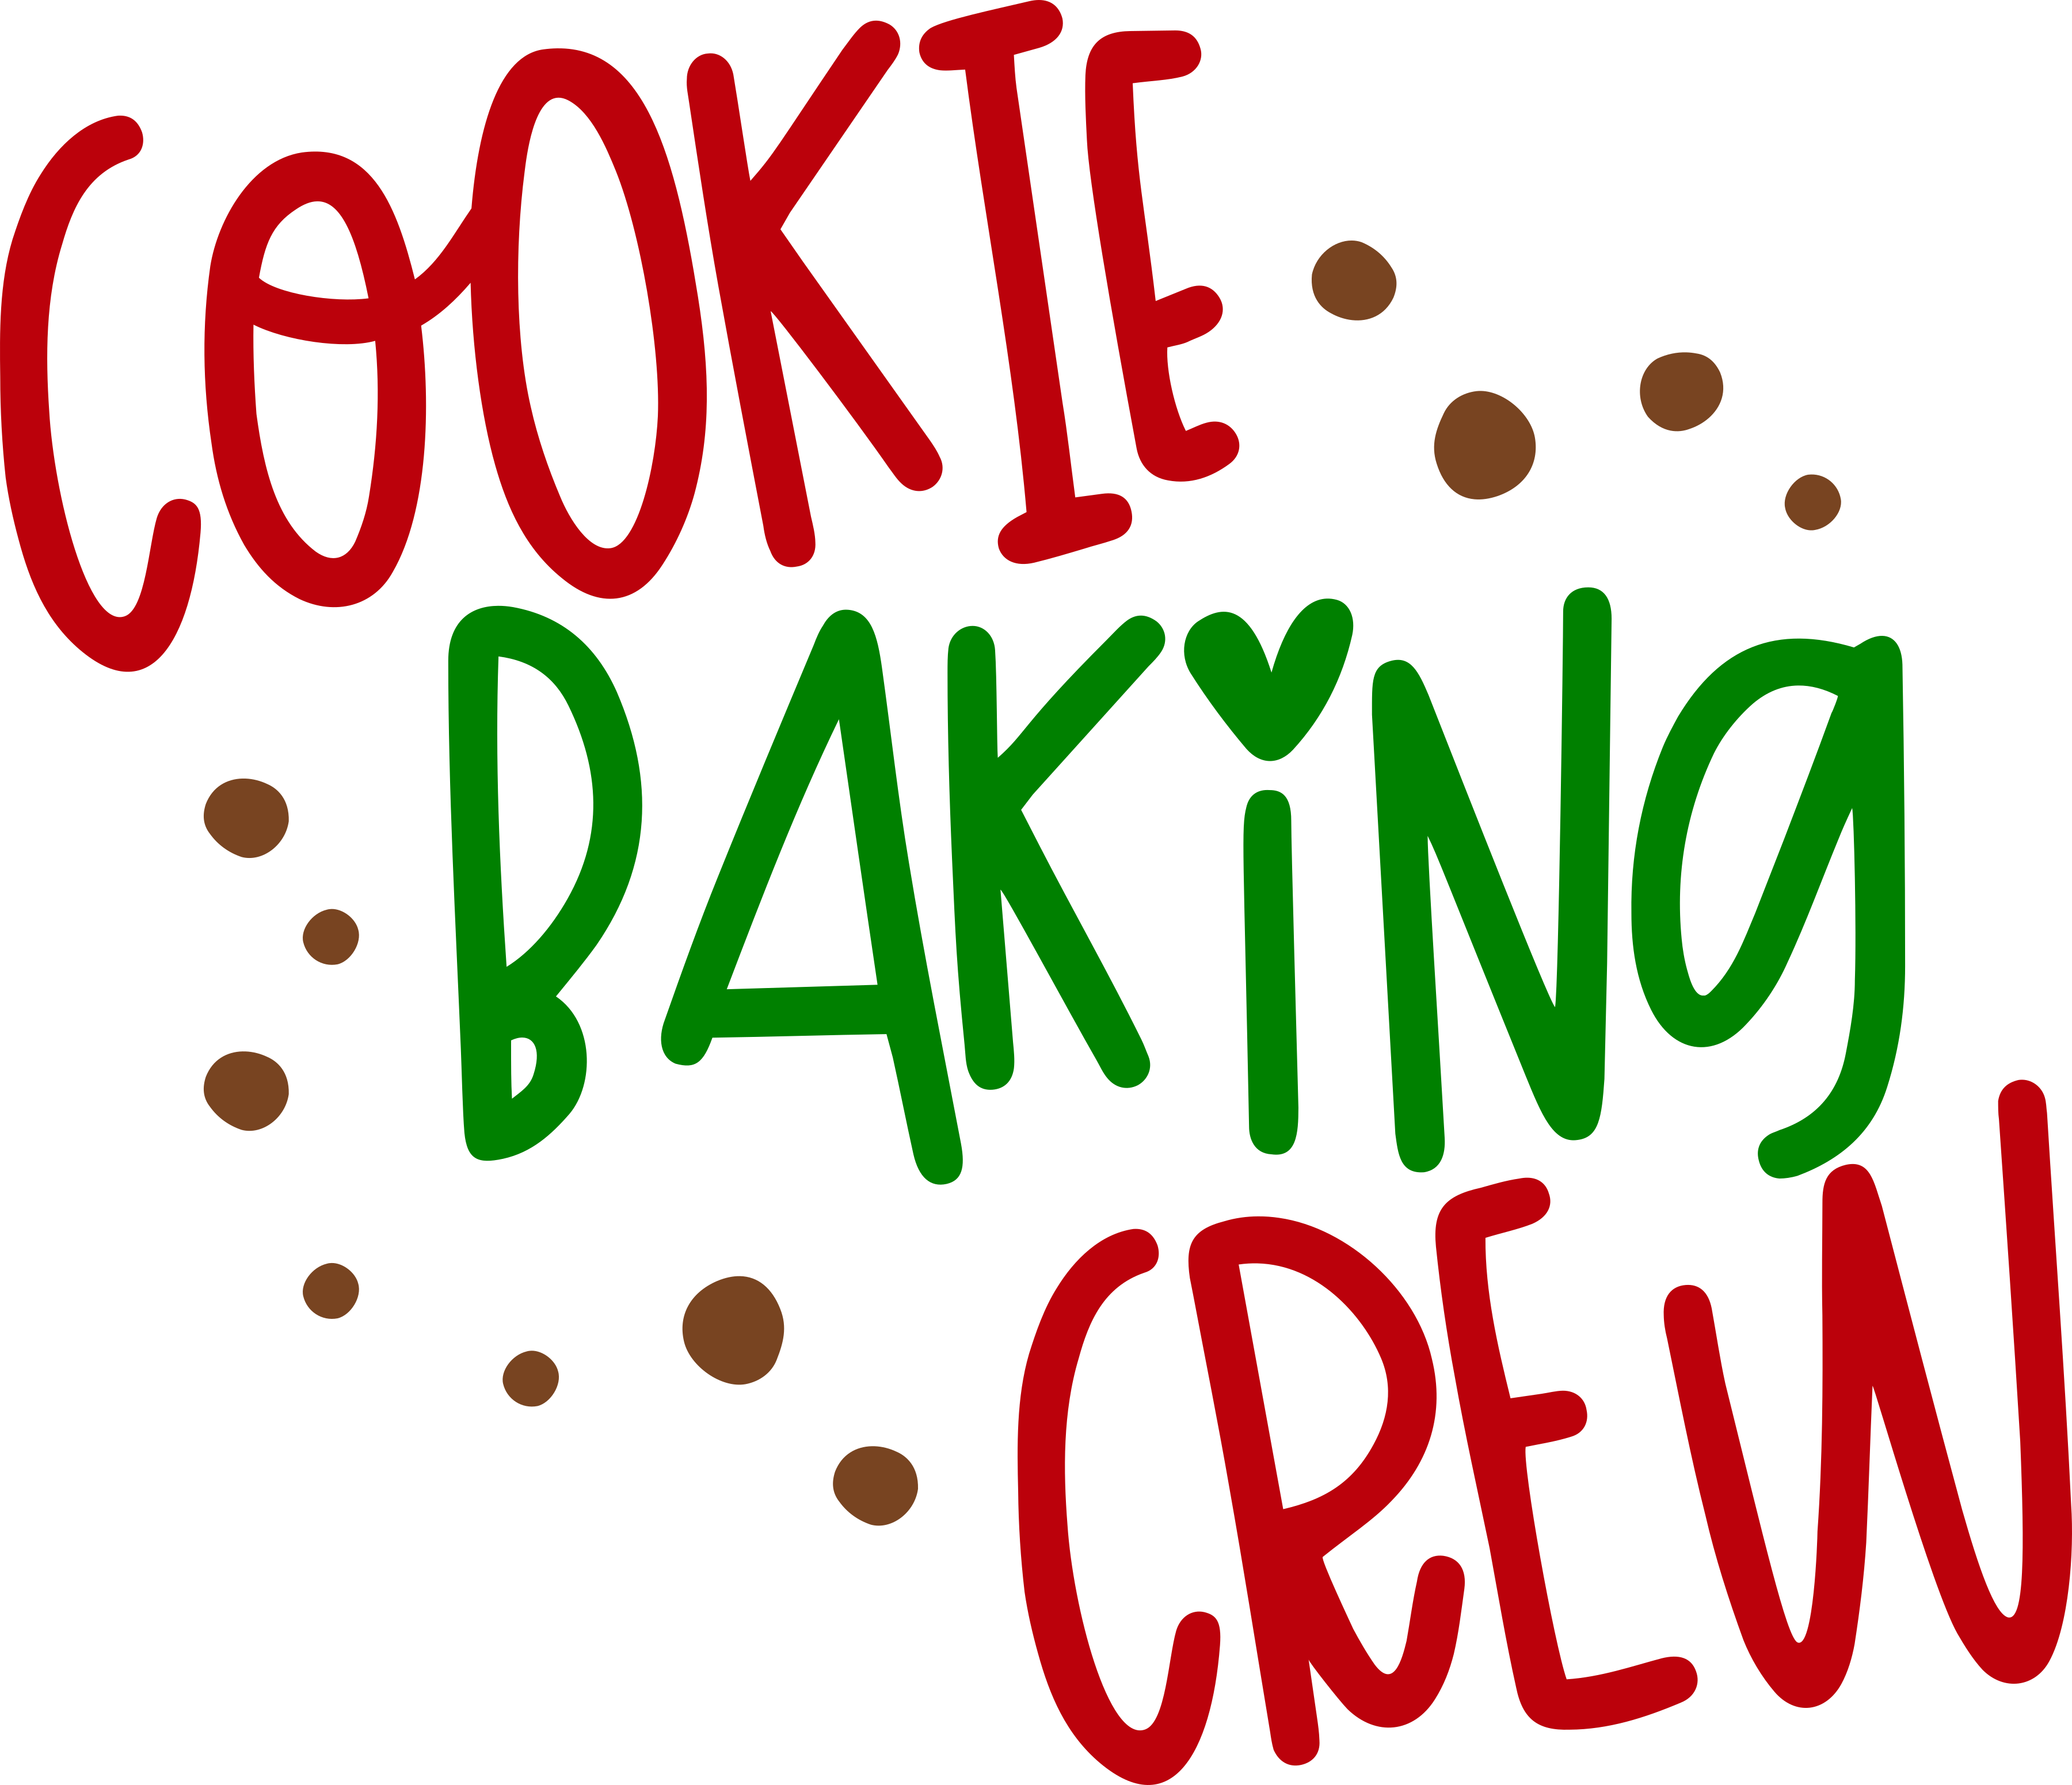 Cookie Baking Crew White Lily Texas Transfers 